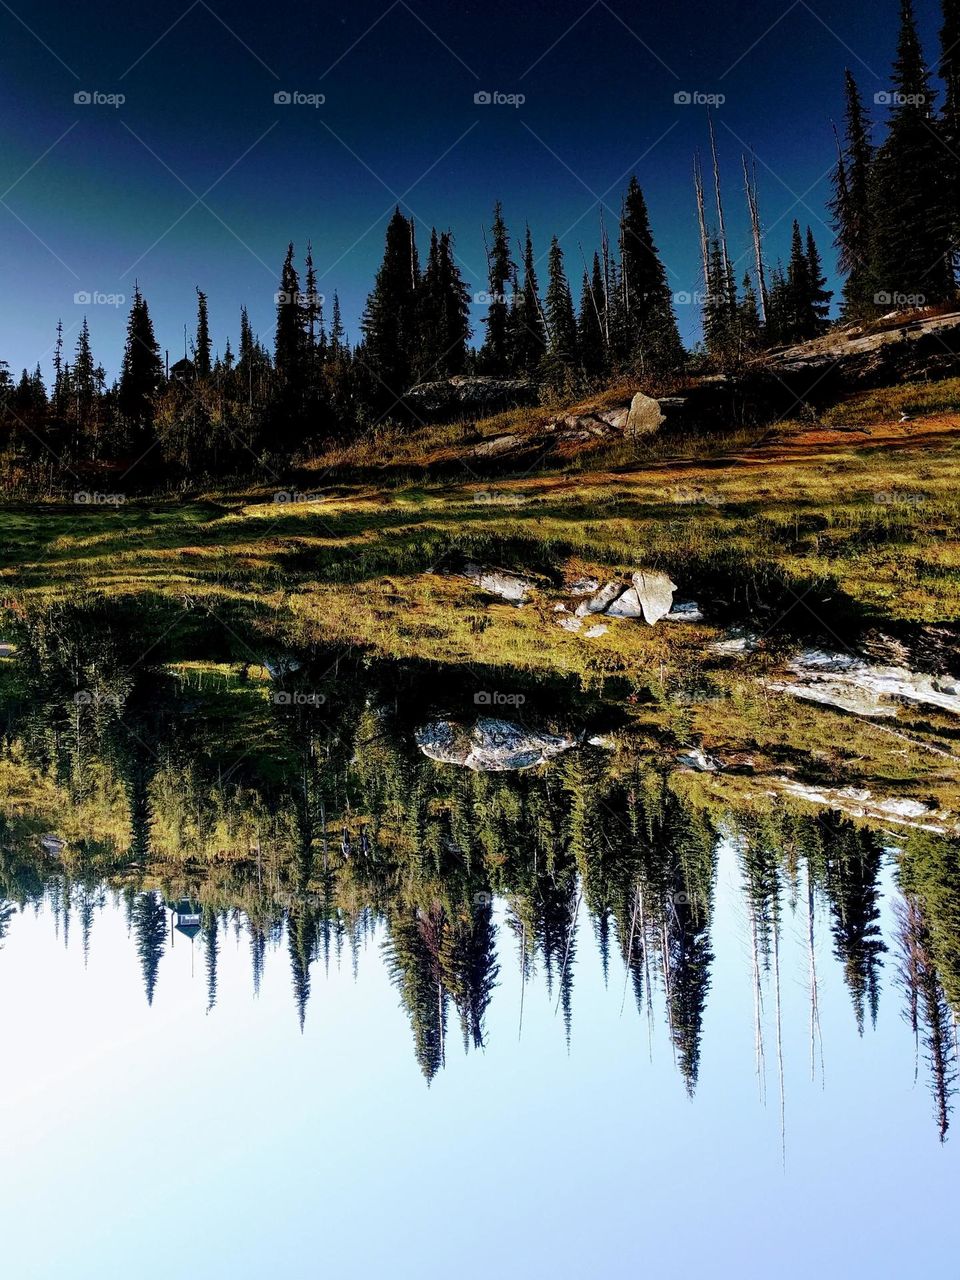 mirrored pine trees in revelstoke lake in Canada